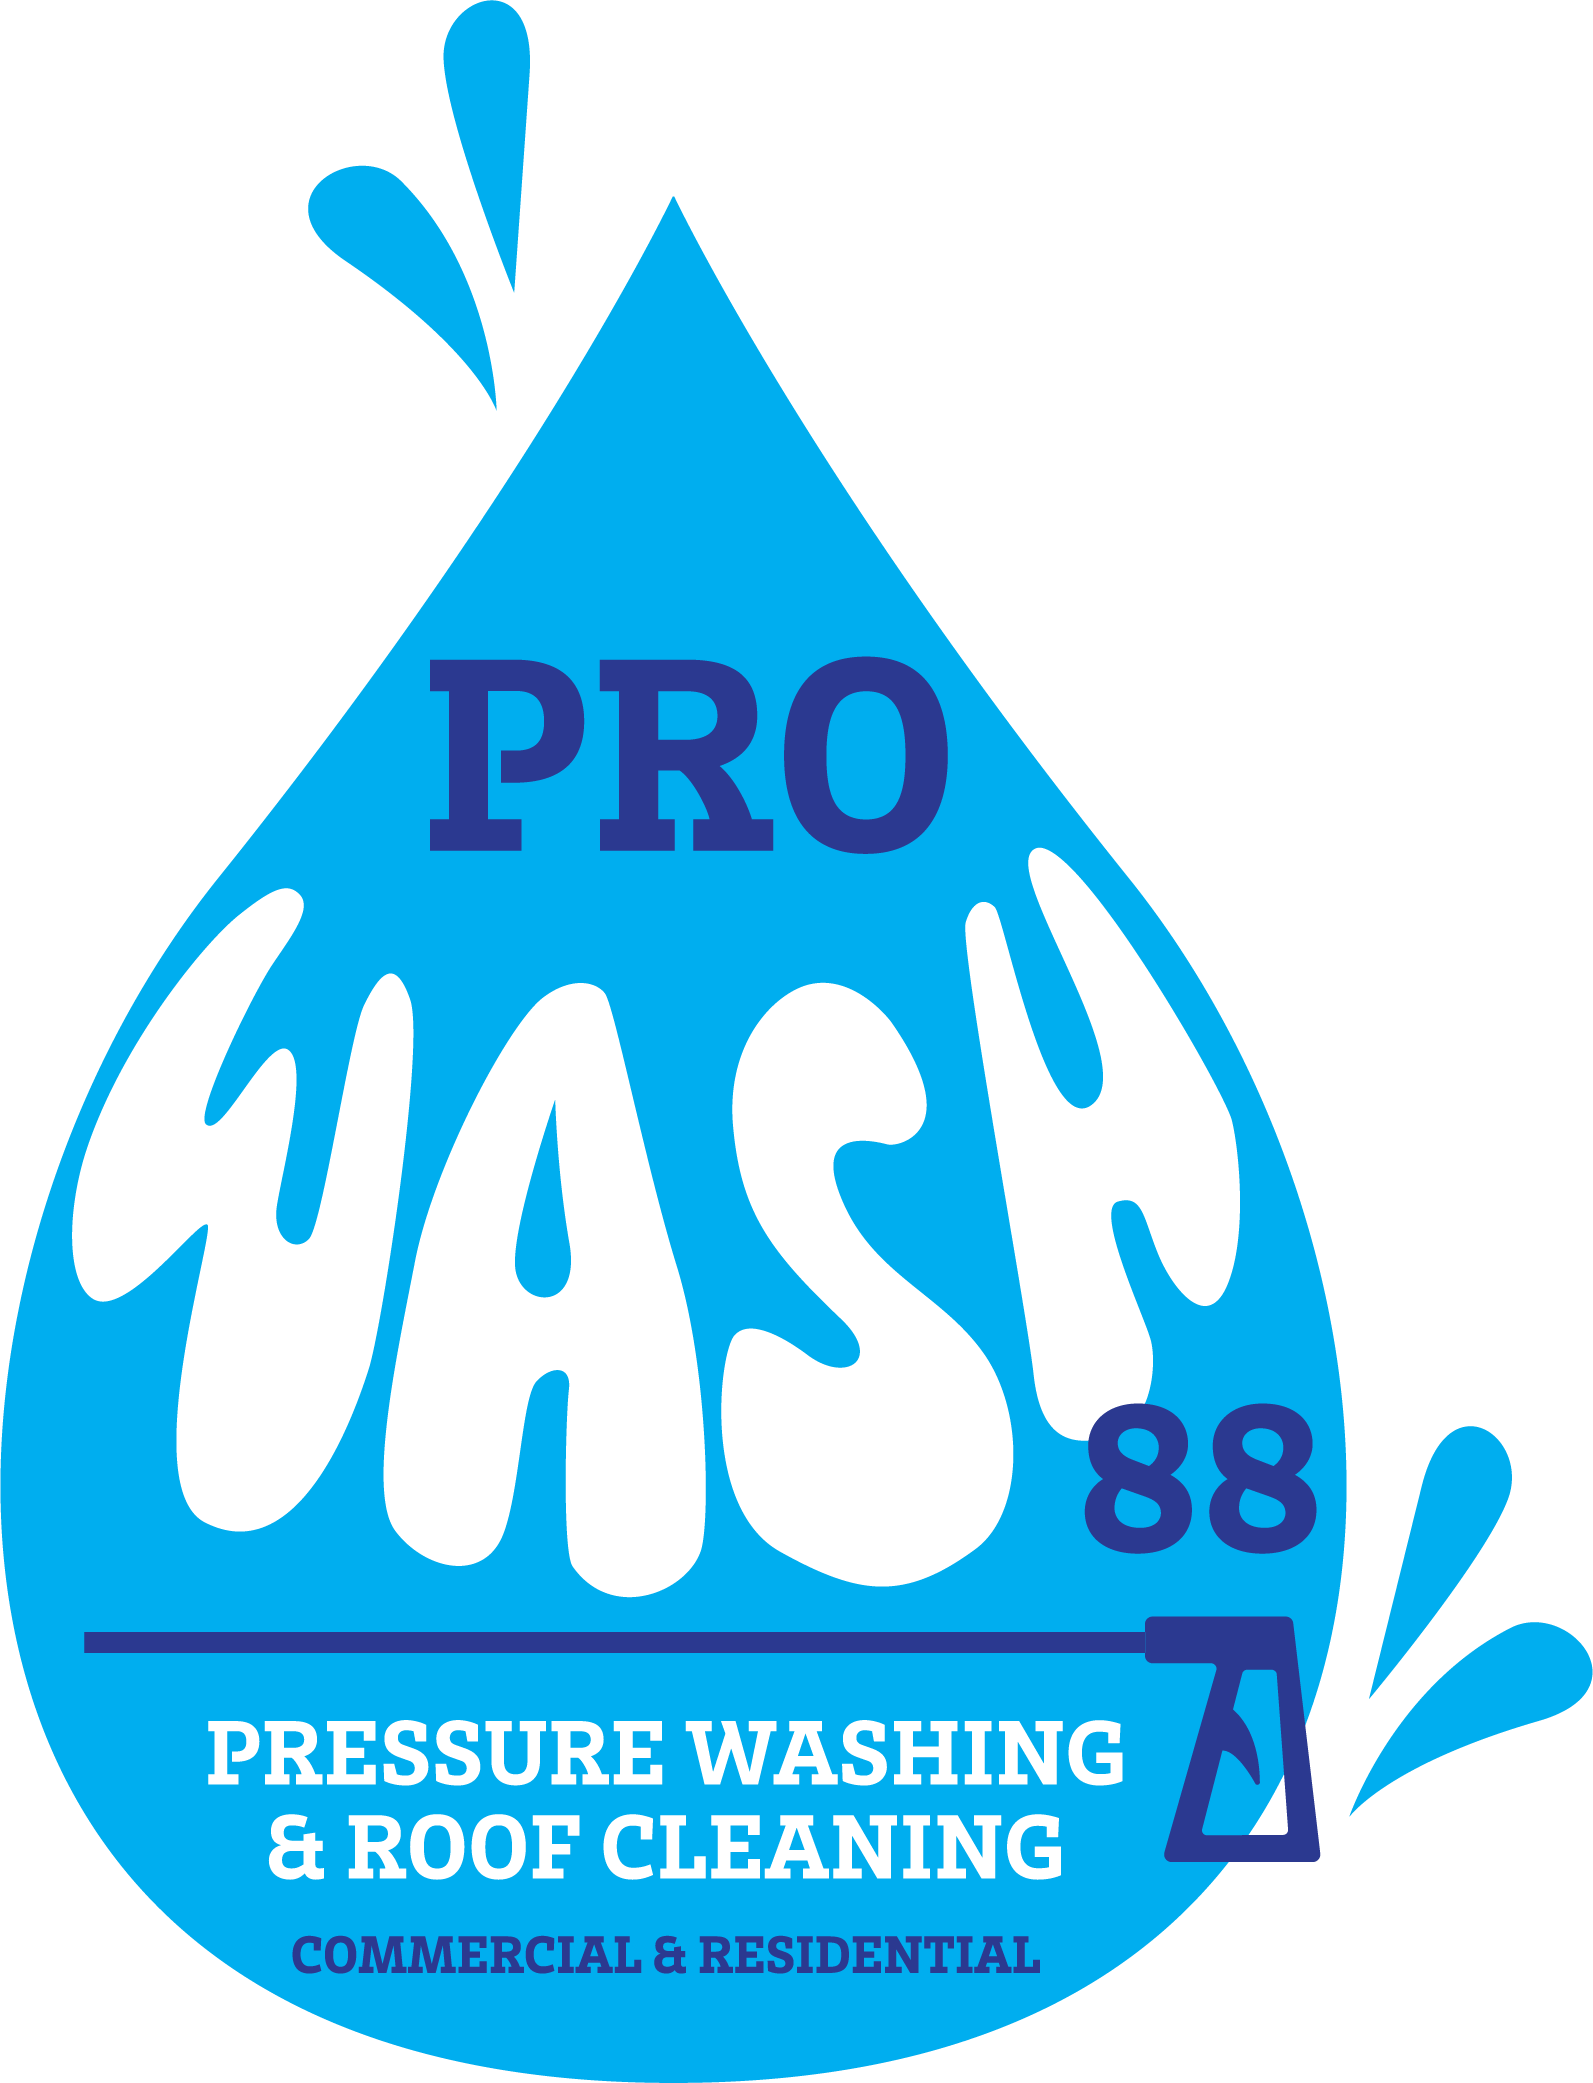 Transparent Prowash 88 logo